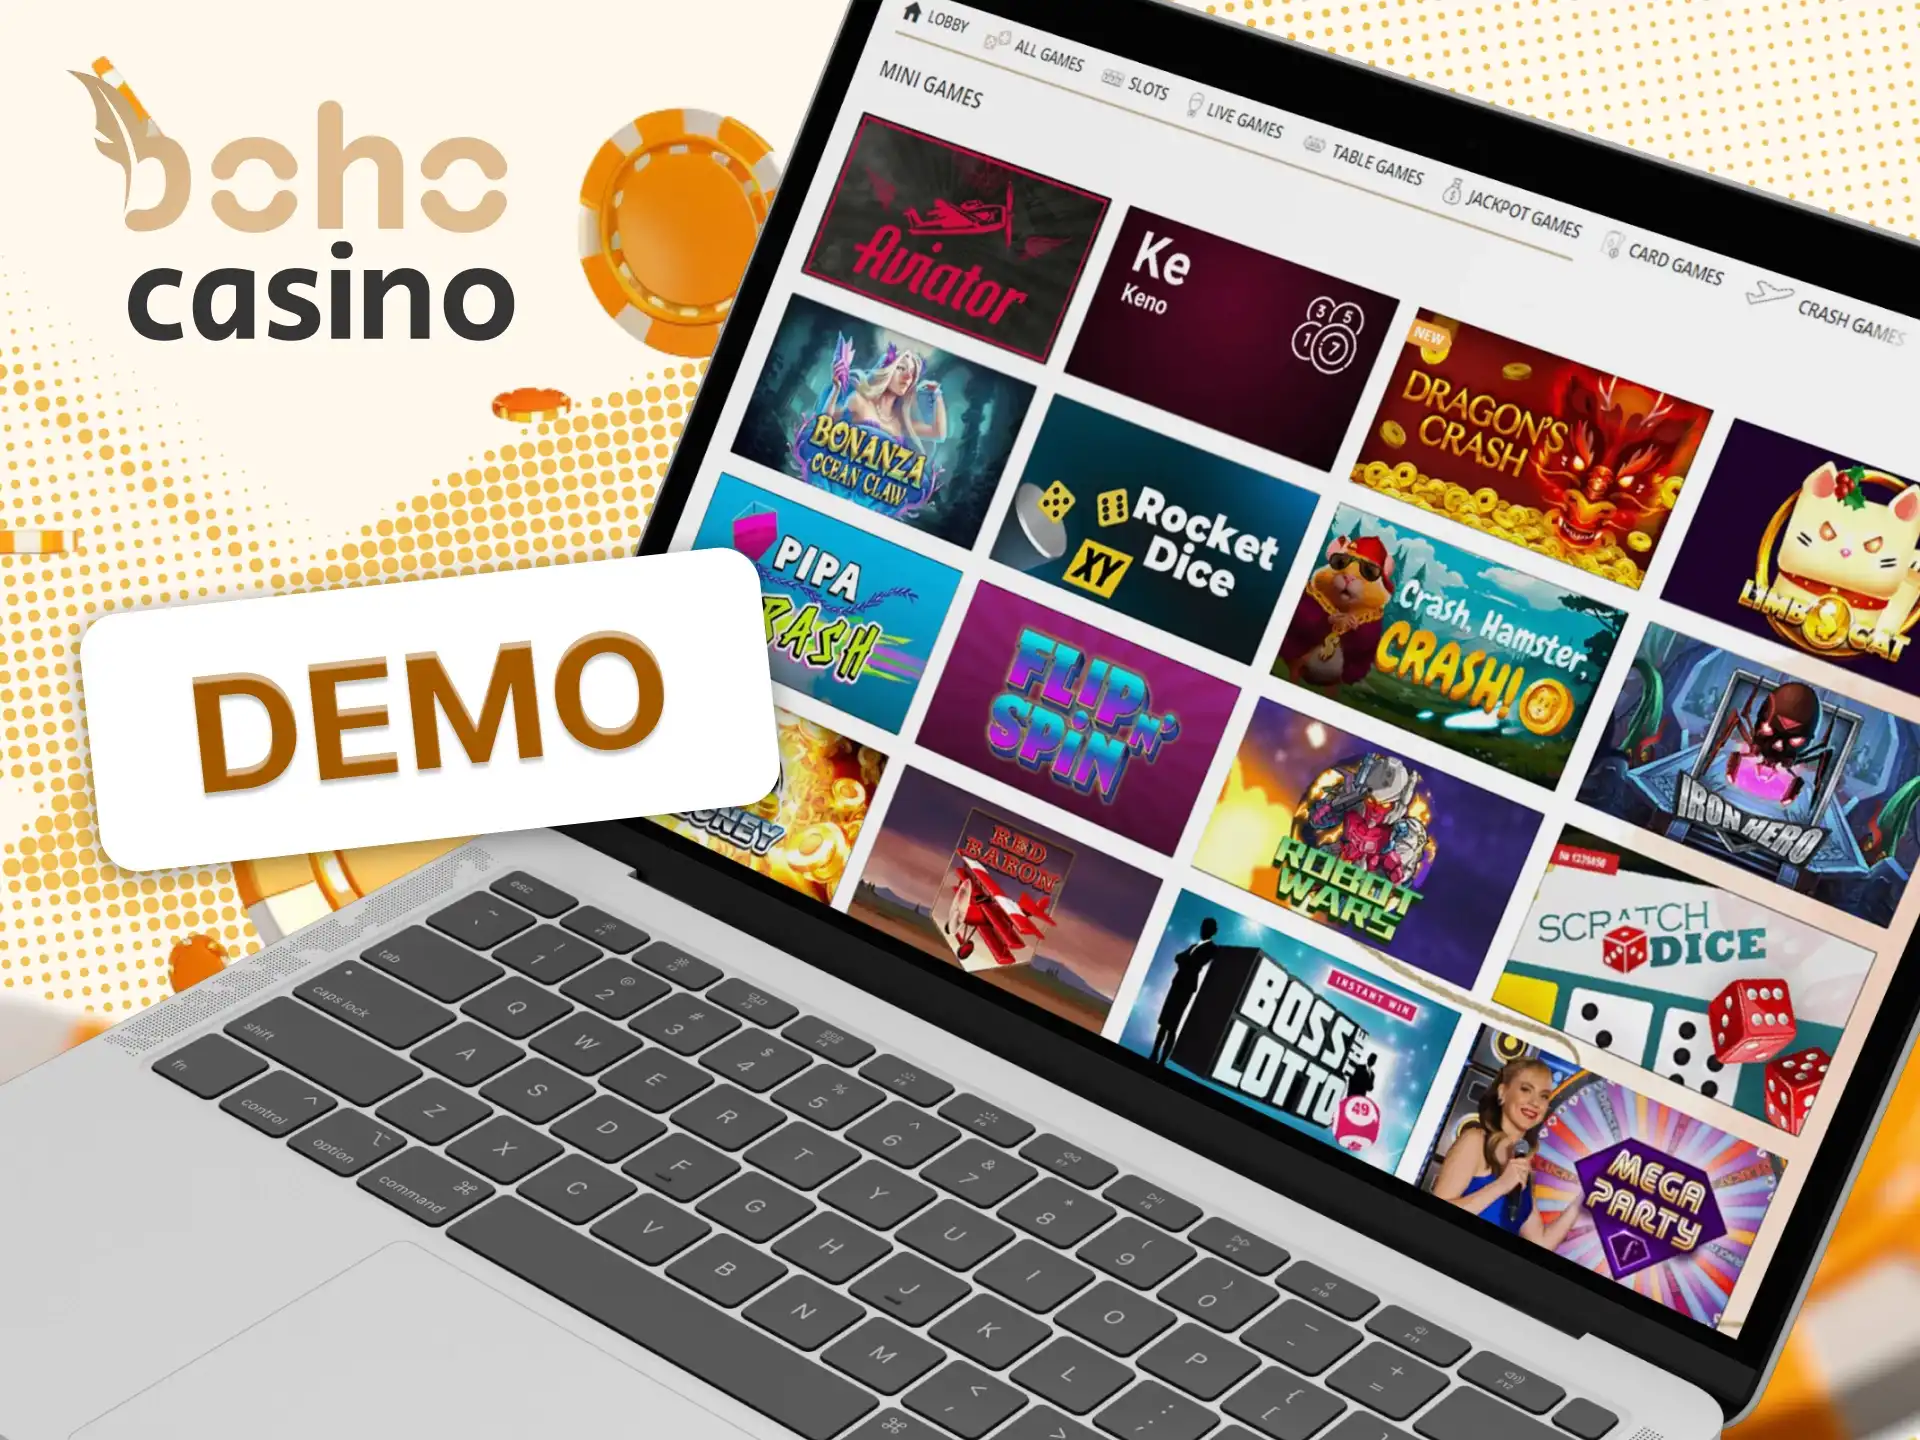 Boho Casino has demo versions for mini games.